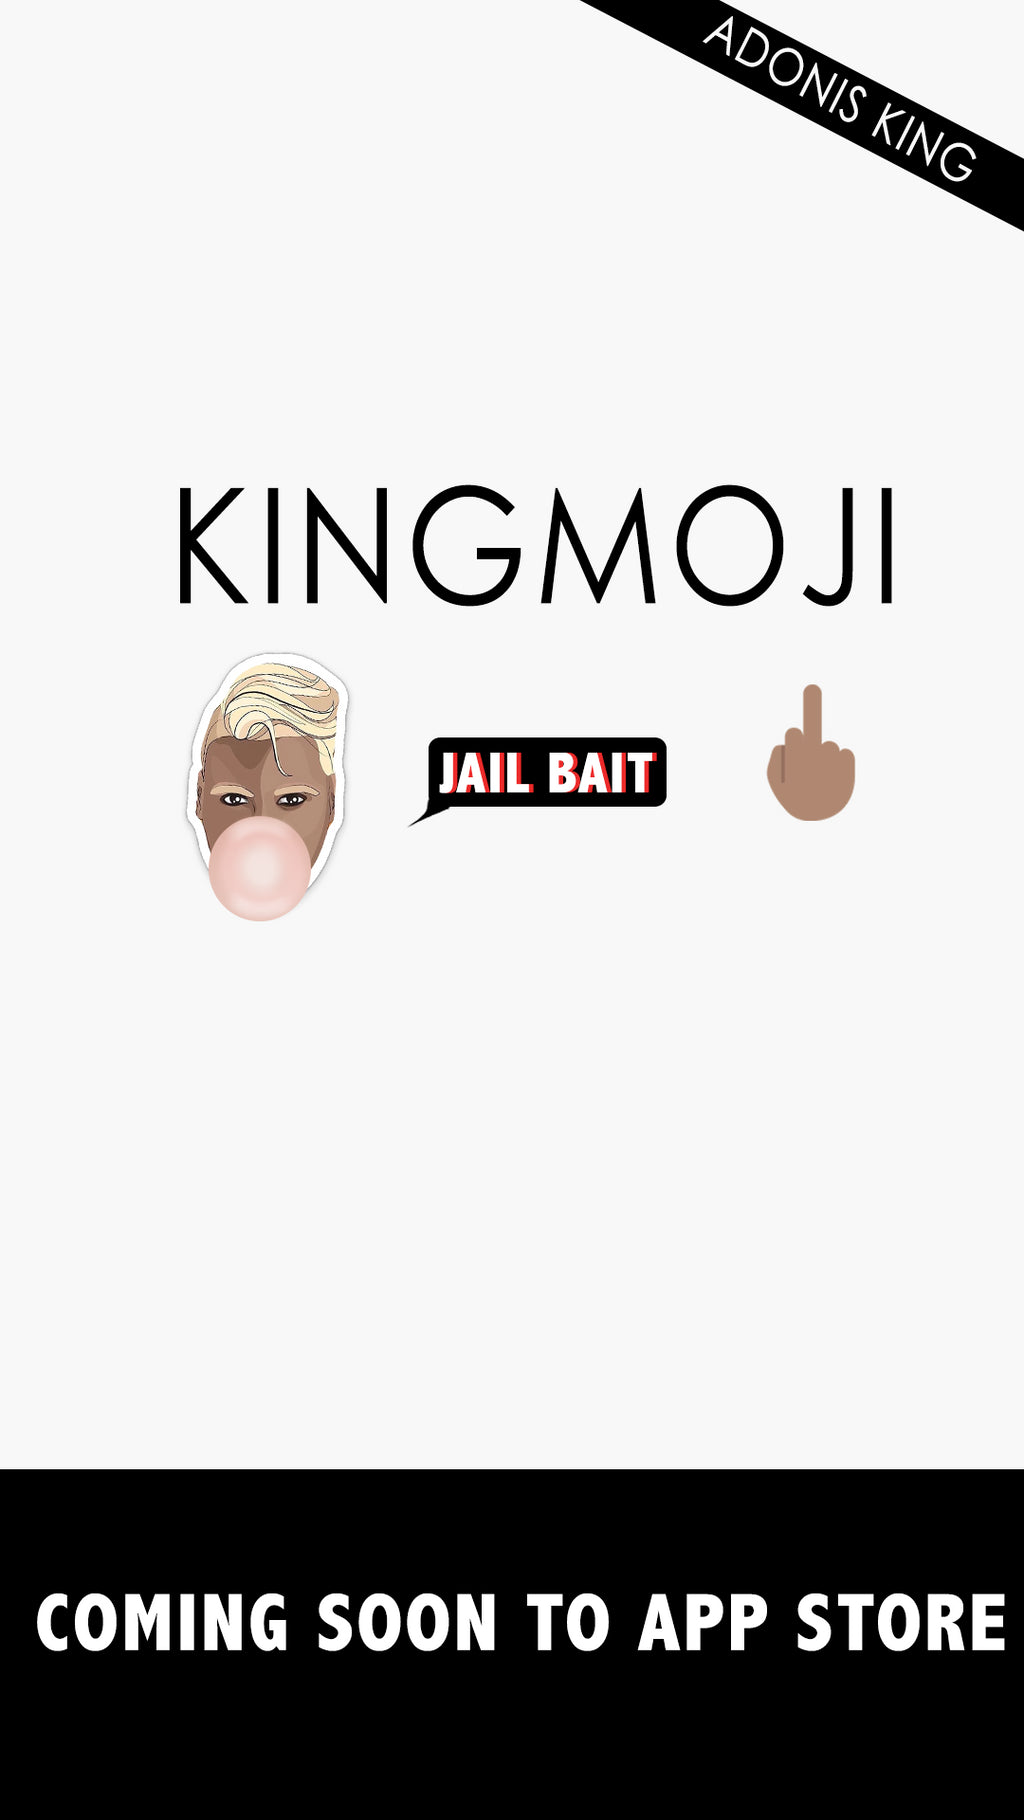 Say Hello To Kingmoji — Adonis King’s Emoji App!